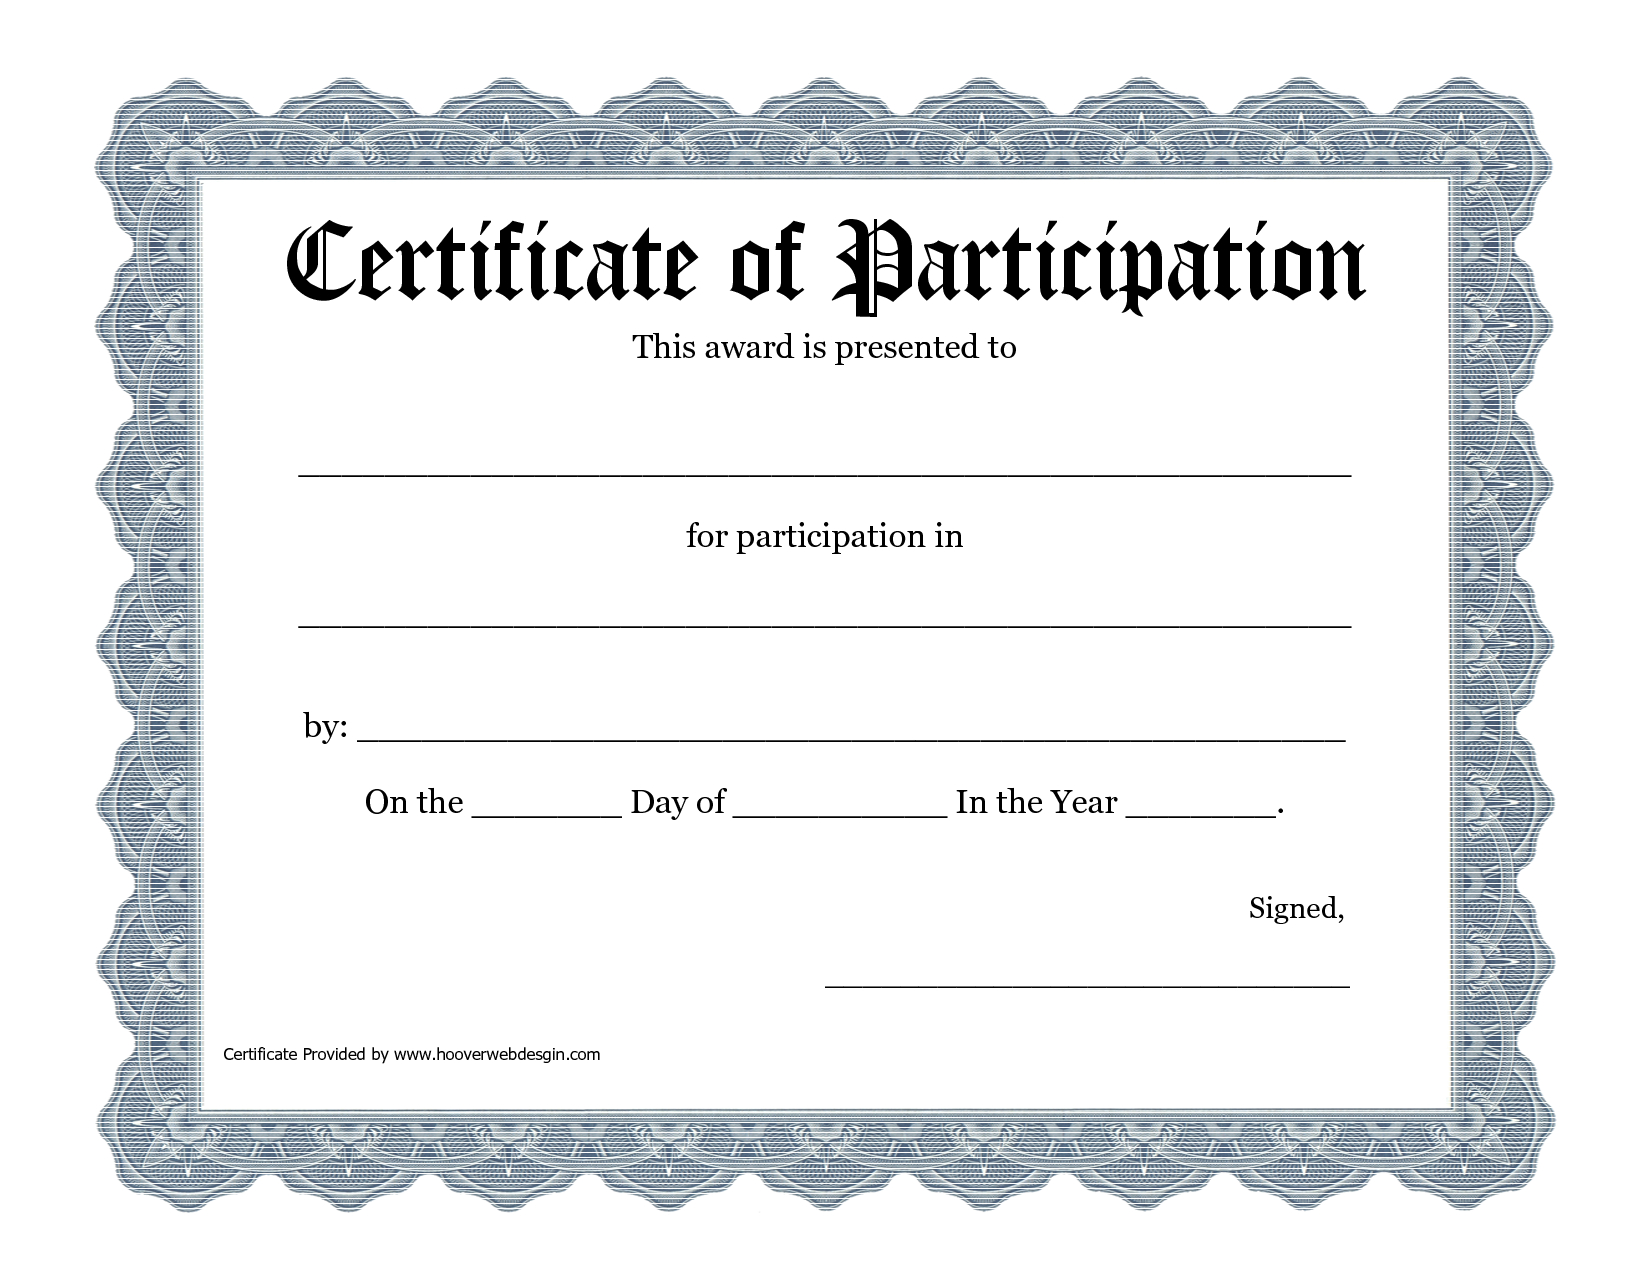 Certificate Of Participation Template Pdf Within Certificate Of Participation Template Pdf